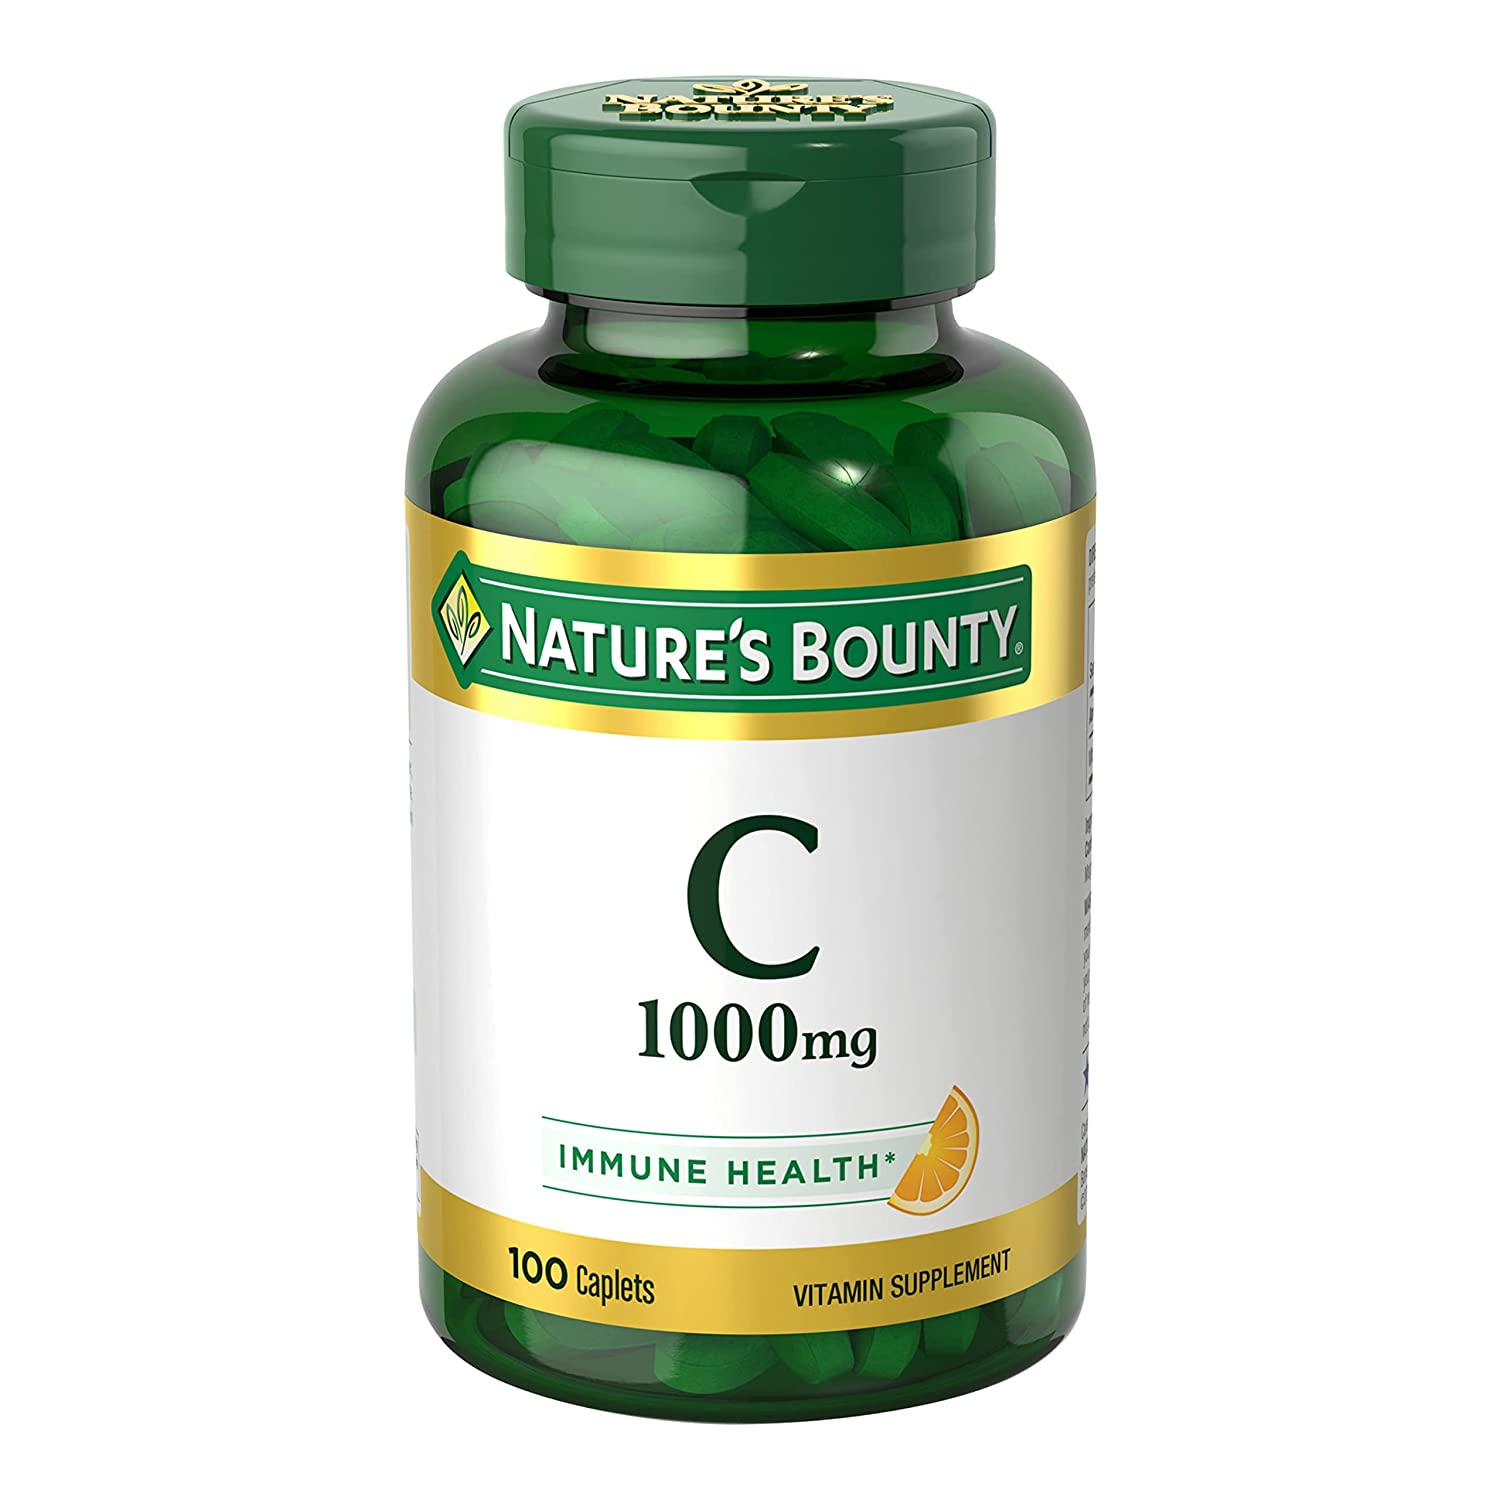 Nature’s Bounty Vitamin C 1000mg - 100 Caplets $5.22